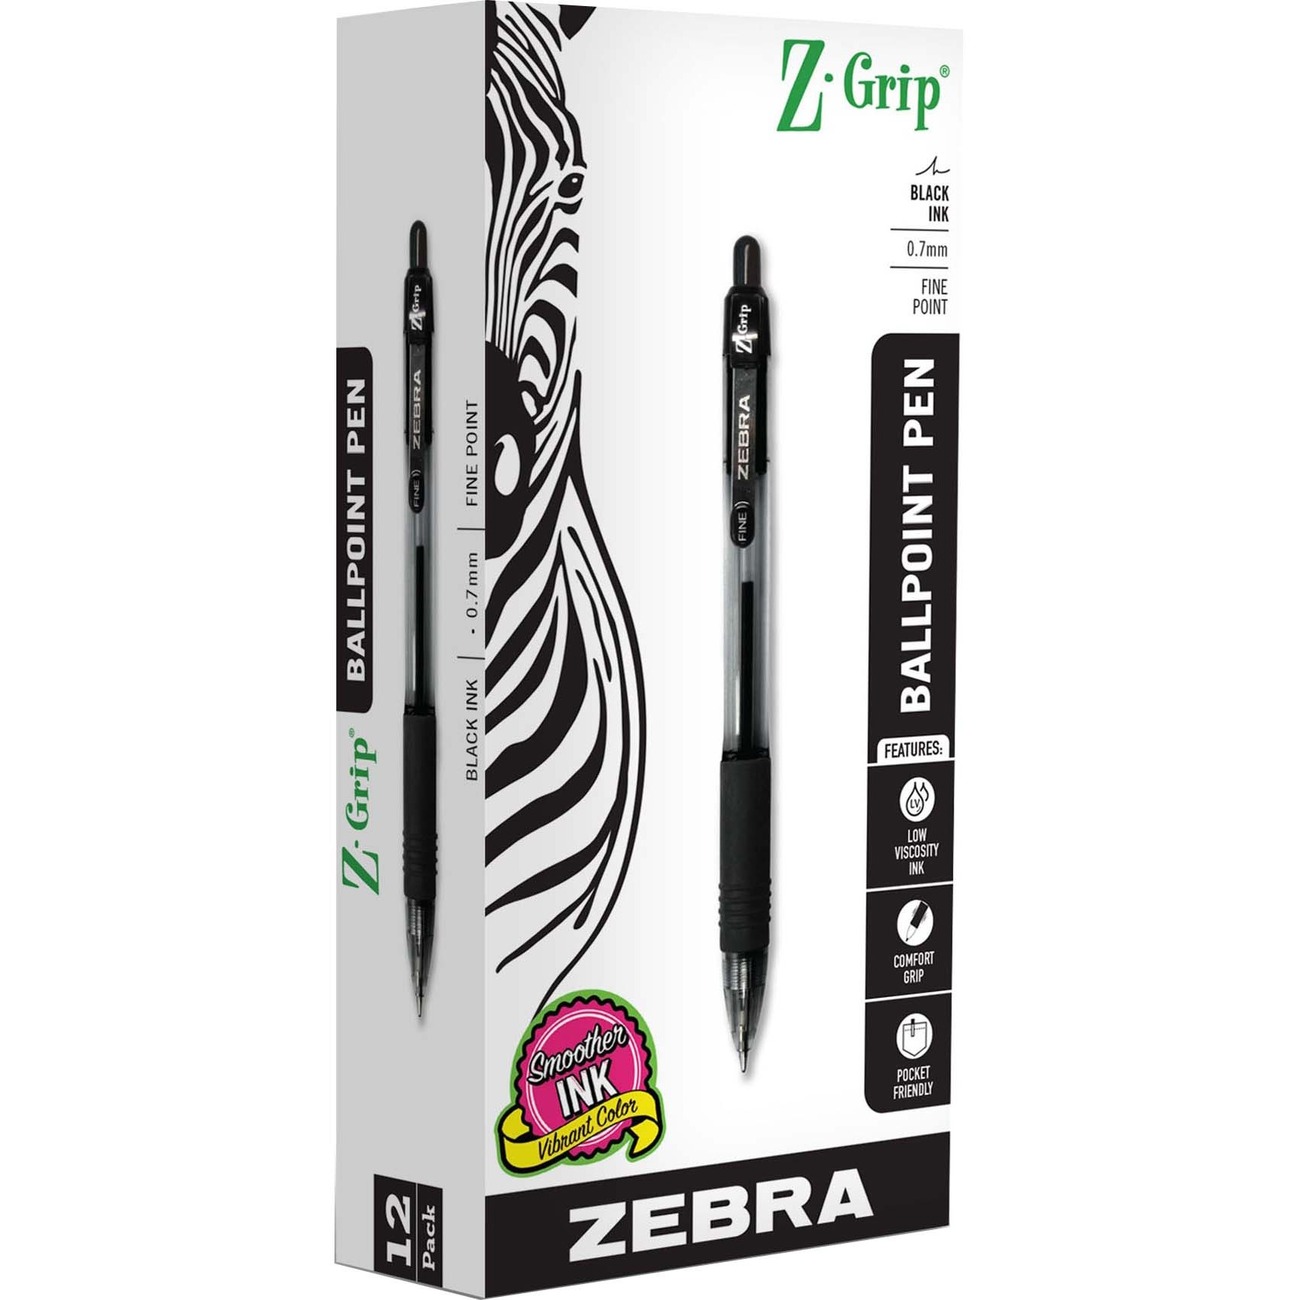 BIC SUPER SMOOTH Gel-ocity gel pens, Bulk Pack Of 24 Ink Pens, 24 Black